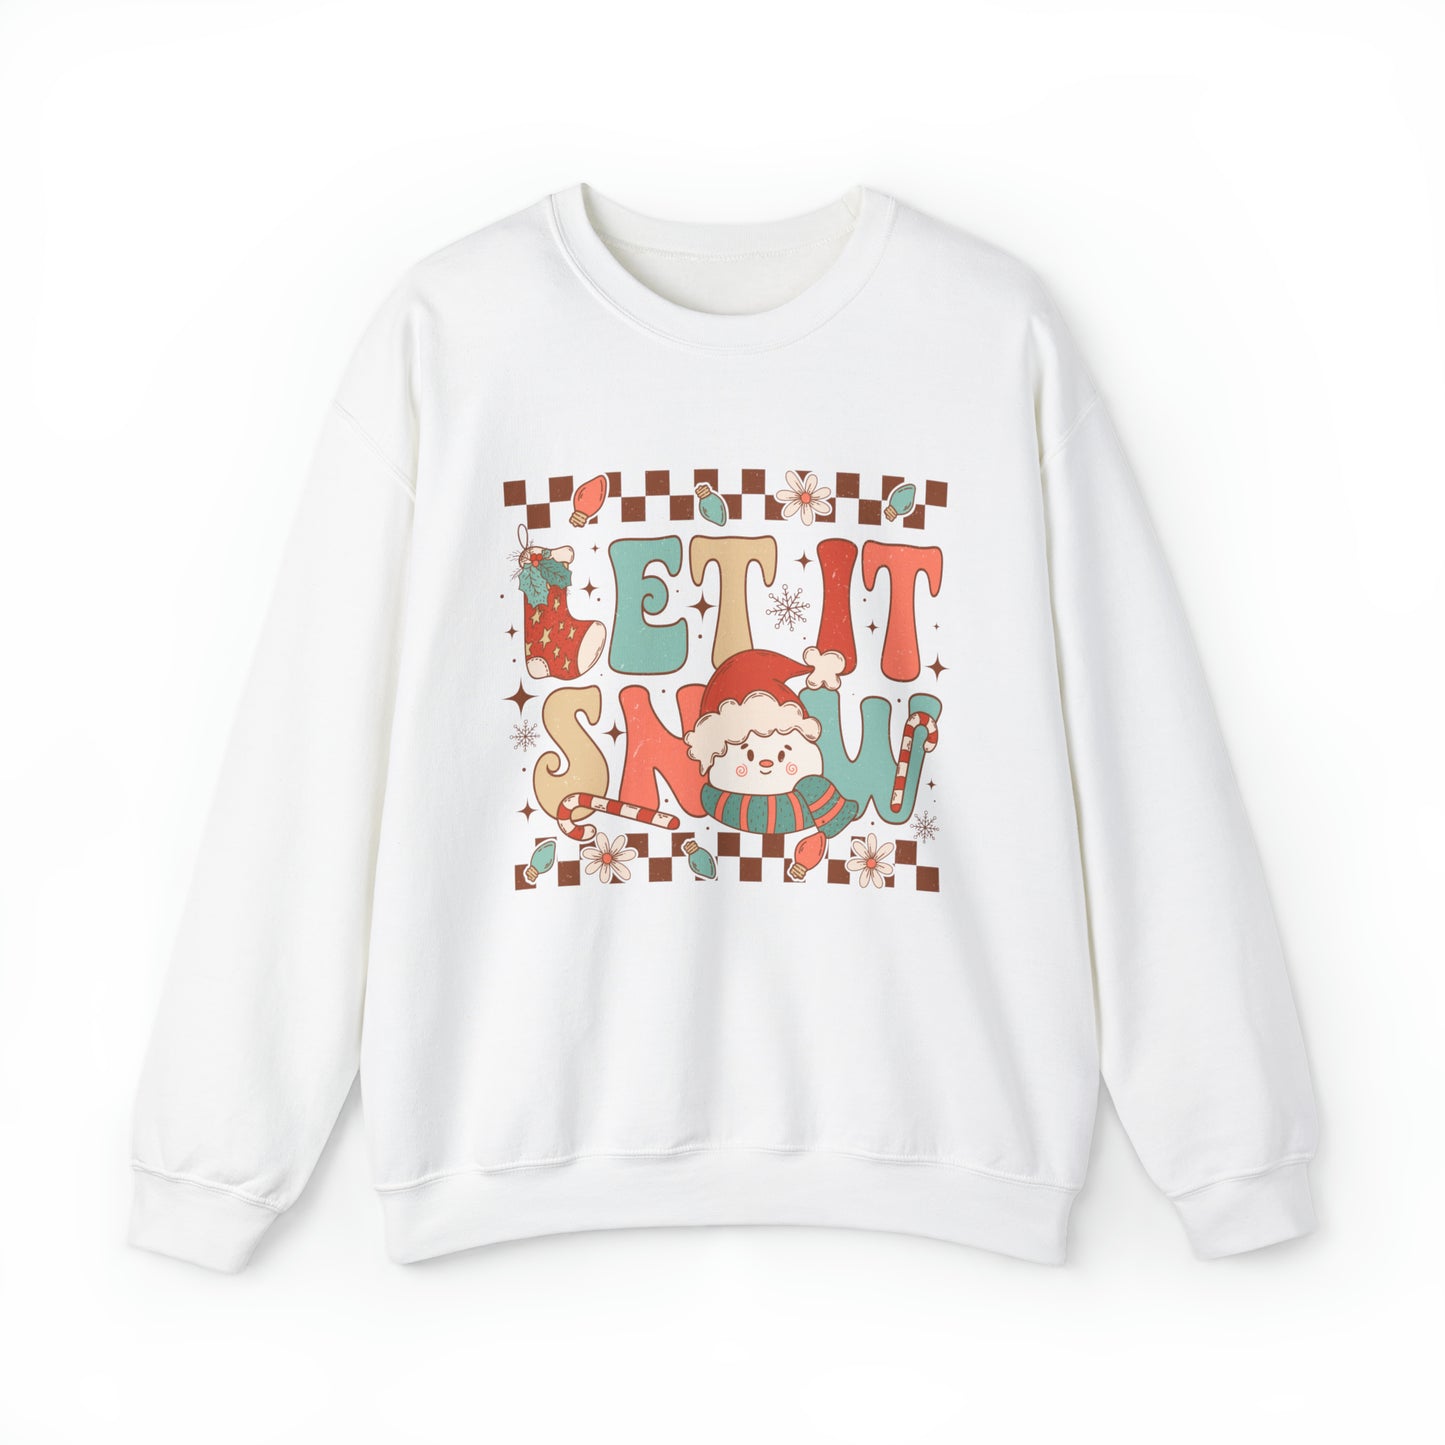 Let it Snow Women's Christmas Sweatshirt